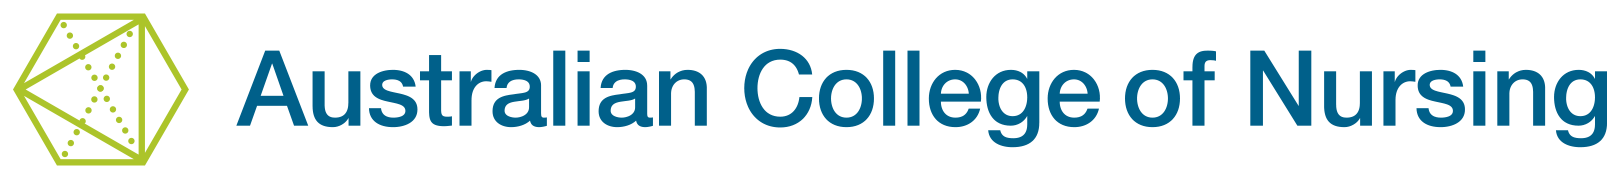 Australian College of Nursing Ltd logo